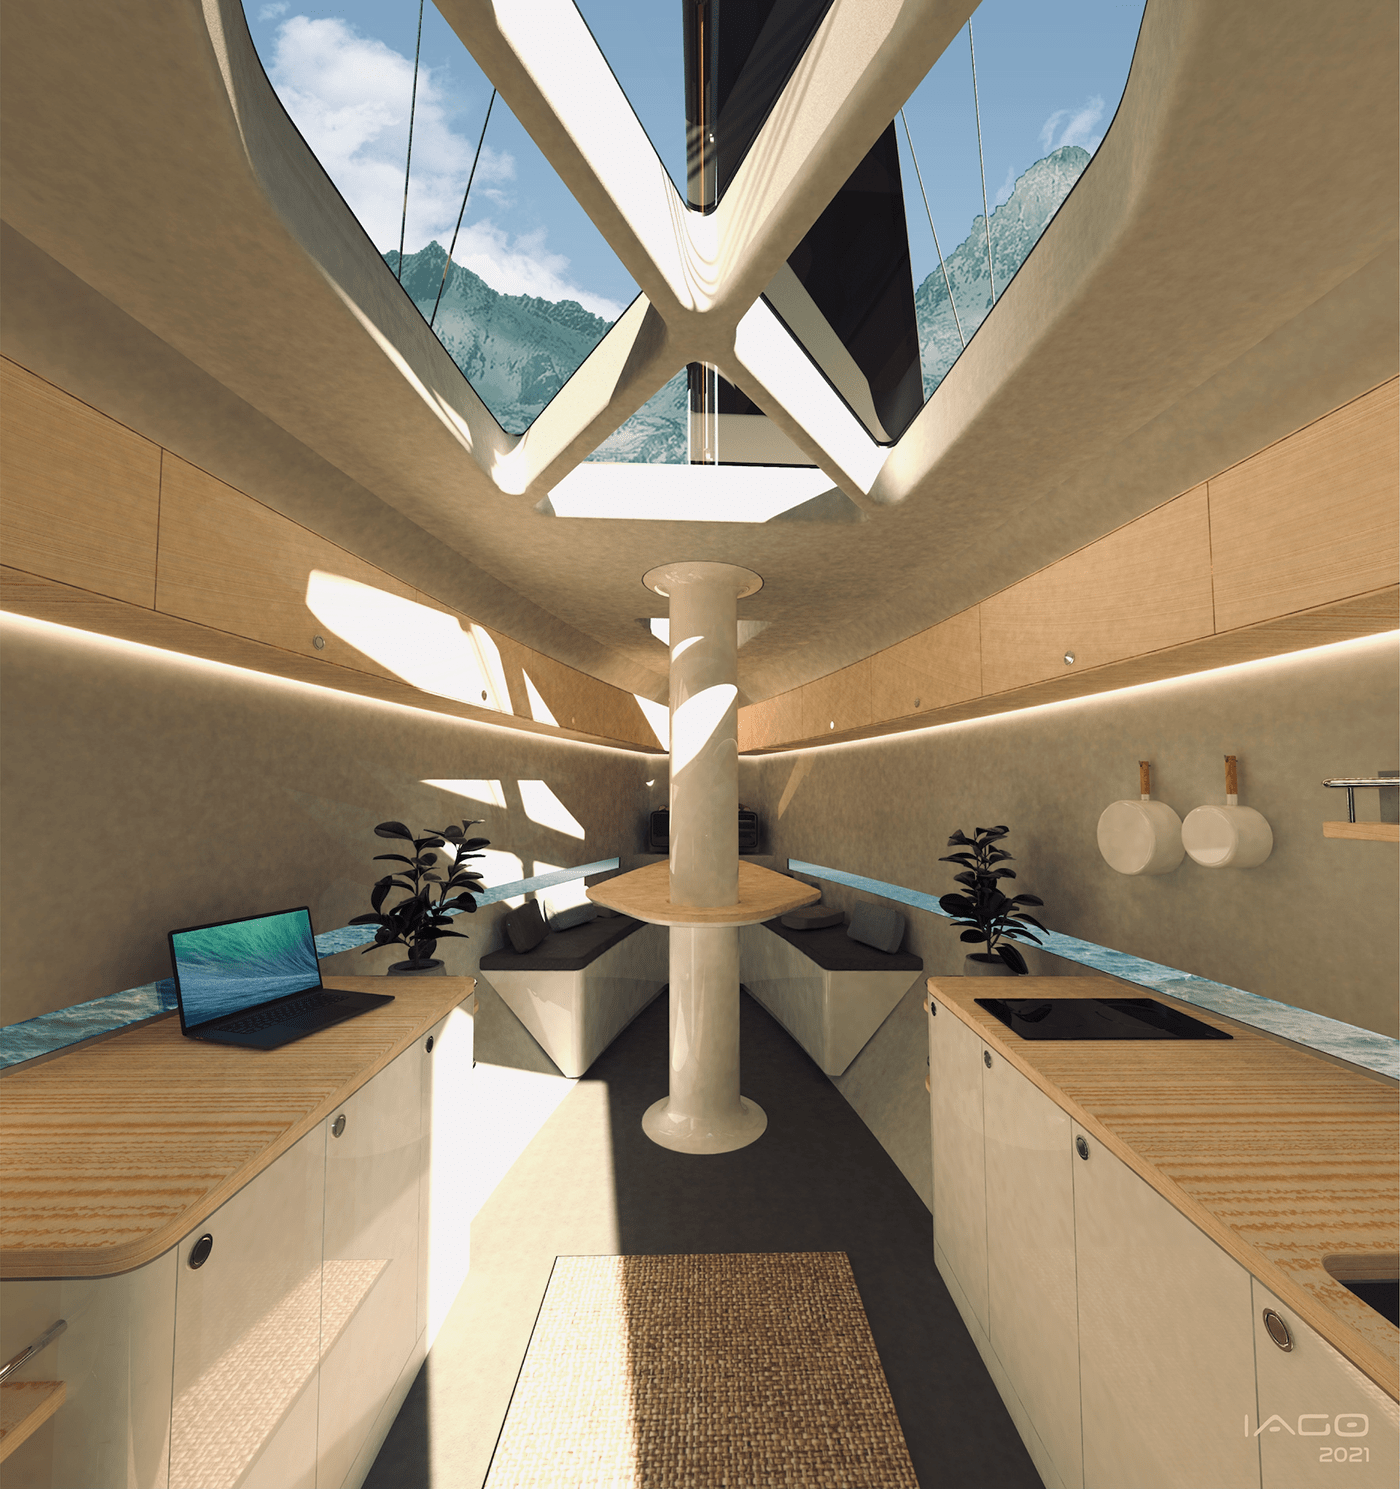 Beneteau design industrial design  interior design  luxury product design  sailboat sailing transportation yatch